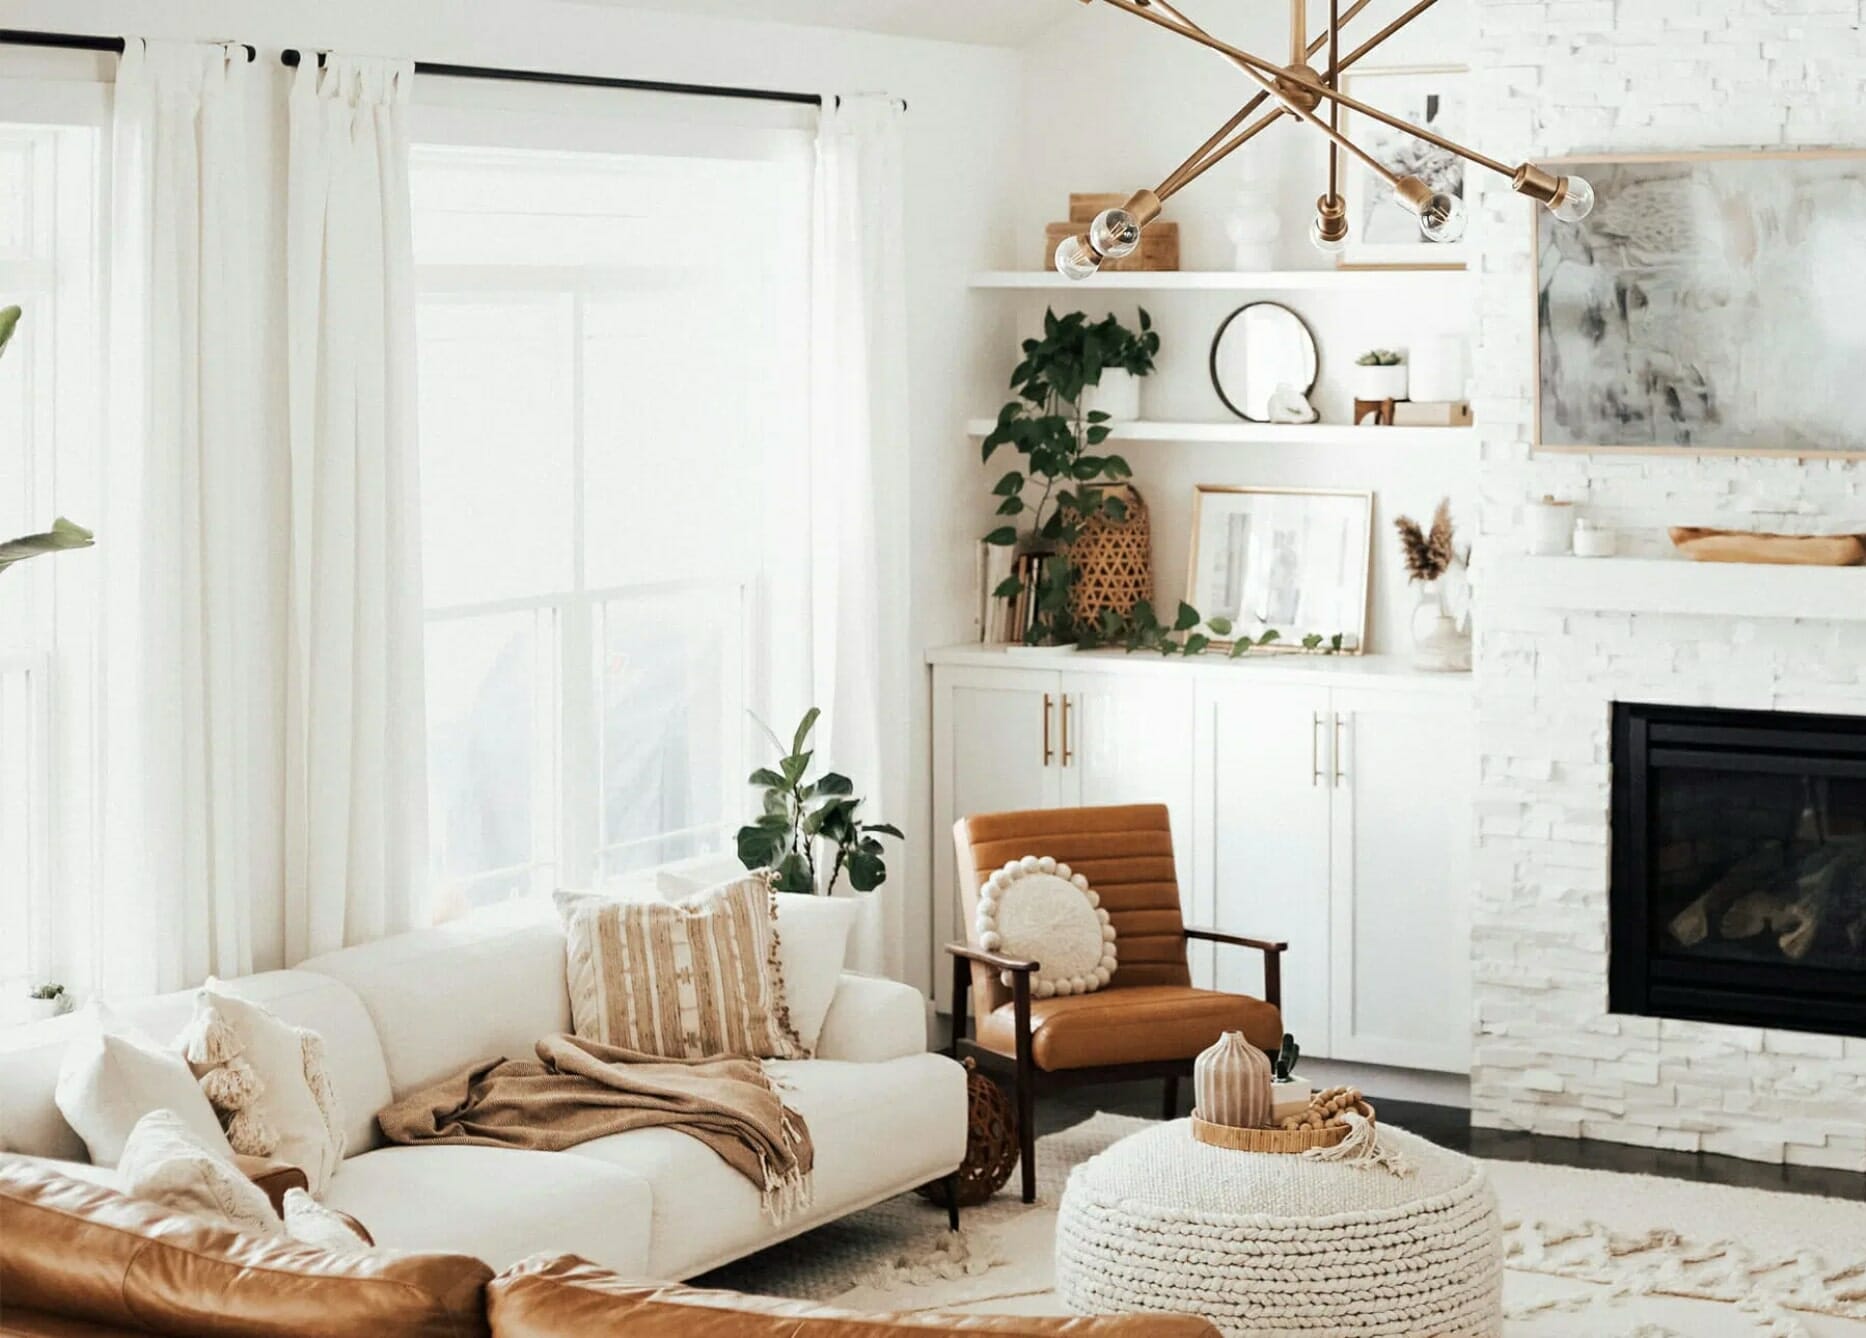 https://www.decorilla.com/online-decorating/wp-content/uploads/2021/08/Cozy-Bohemian-interior-design-living-room-Article.jpg